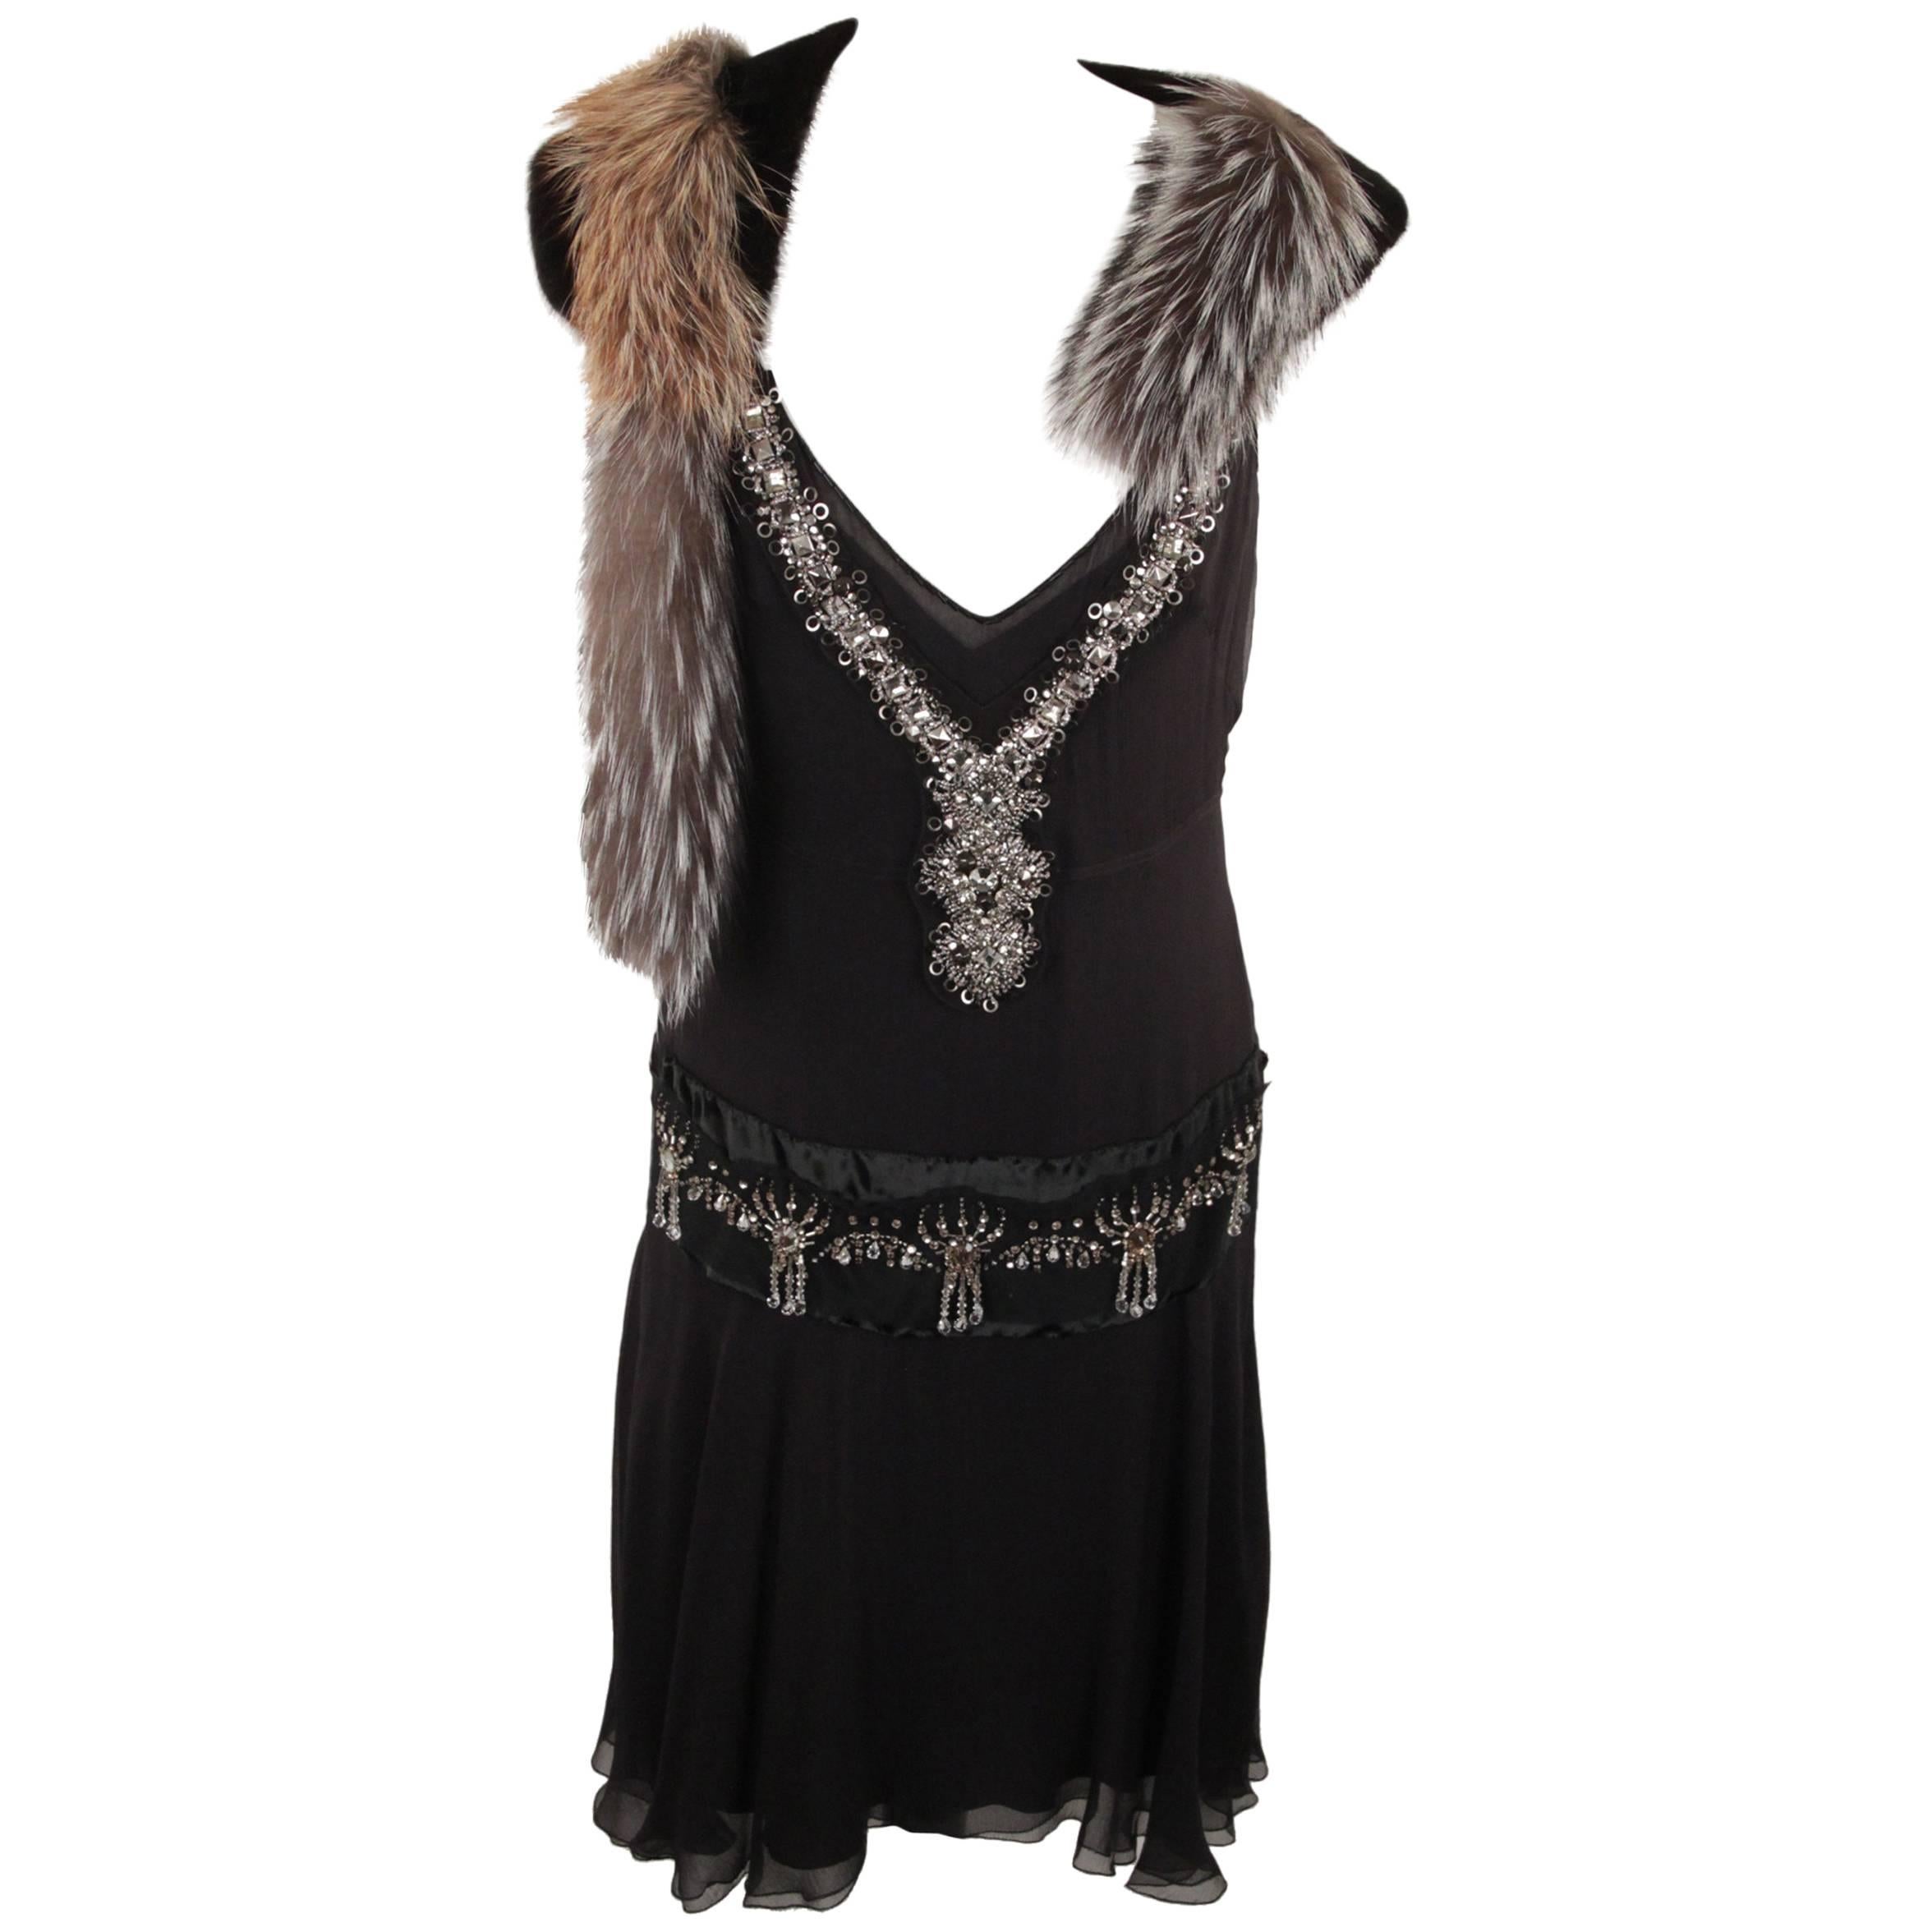 PRADA Black Sleeveless Pure Silk EMBELLISHED DRESS w/ FOX FUR Trim SIZE 42